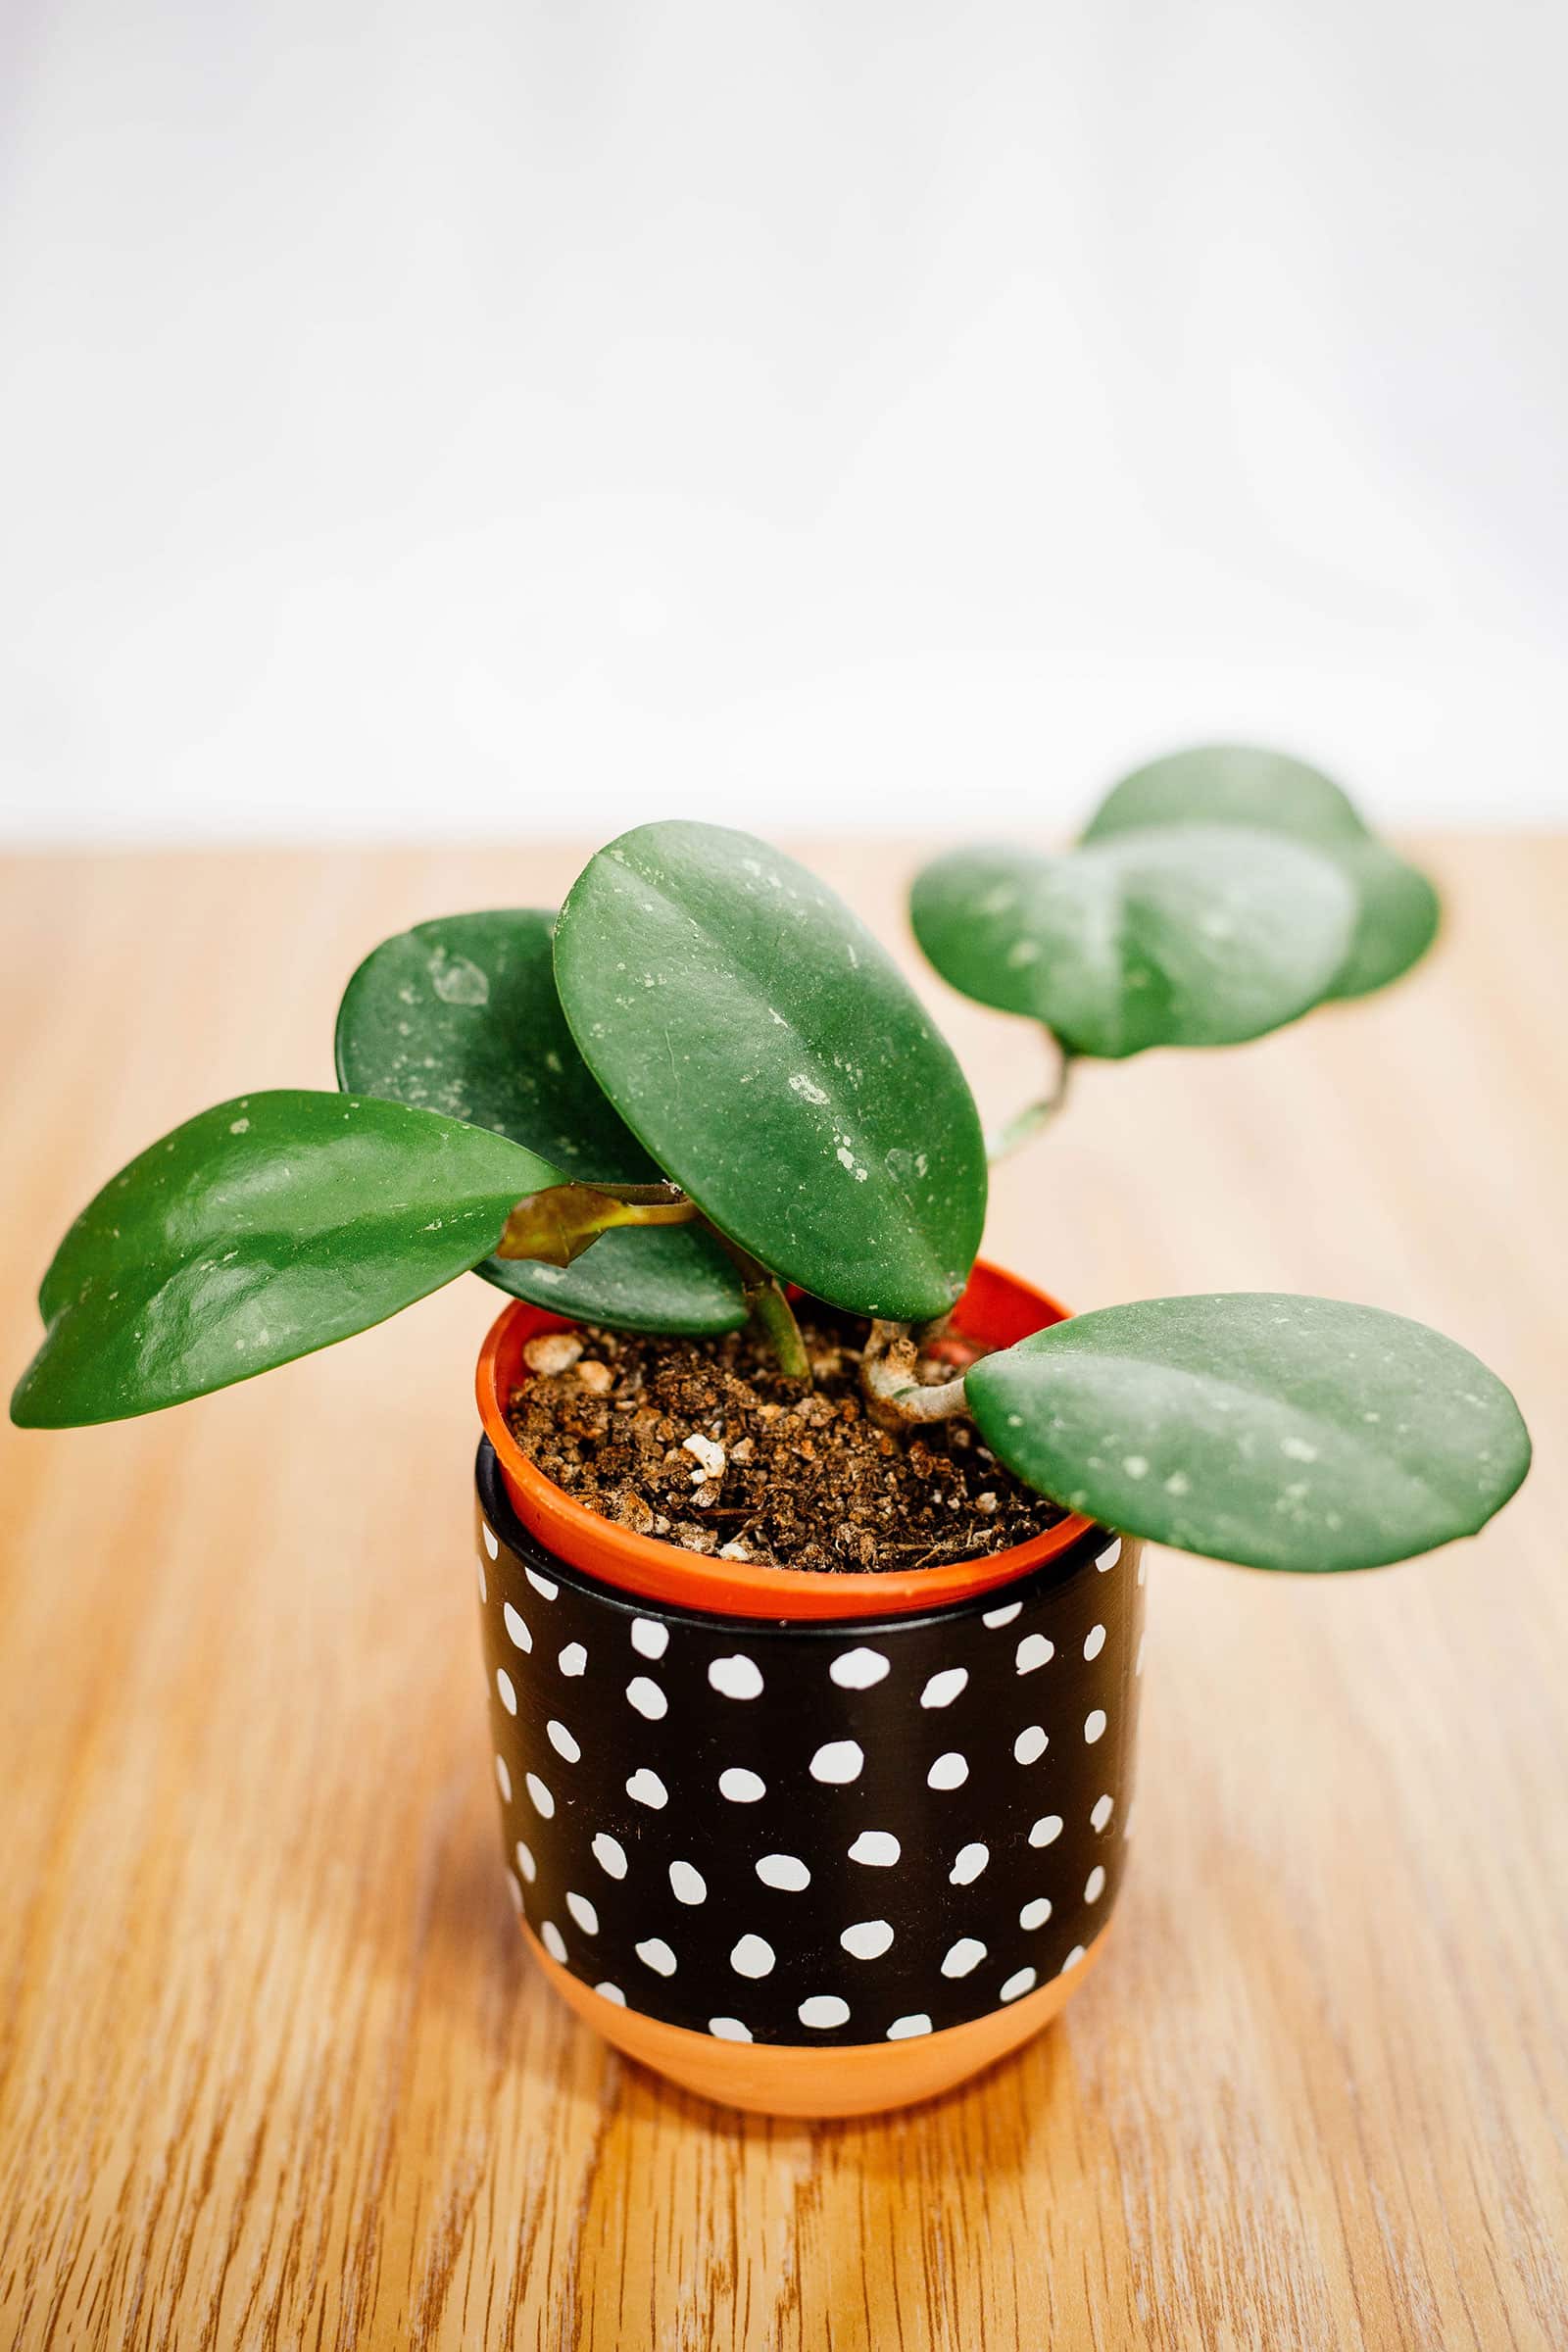 Small Hoya obovata wax plant in a black and white polka dot pot